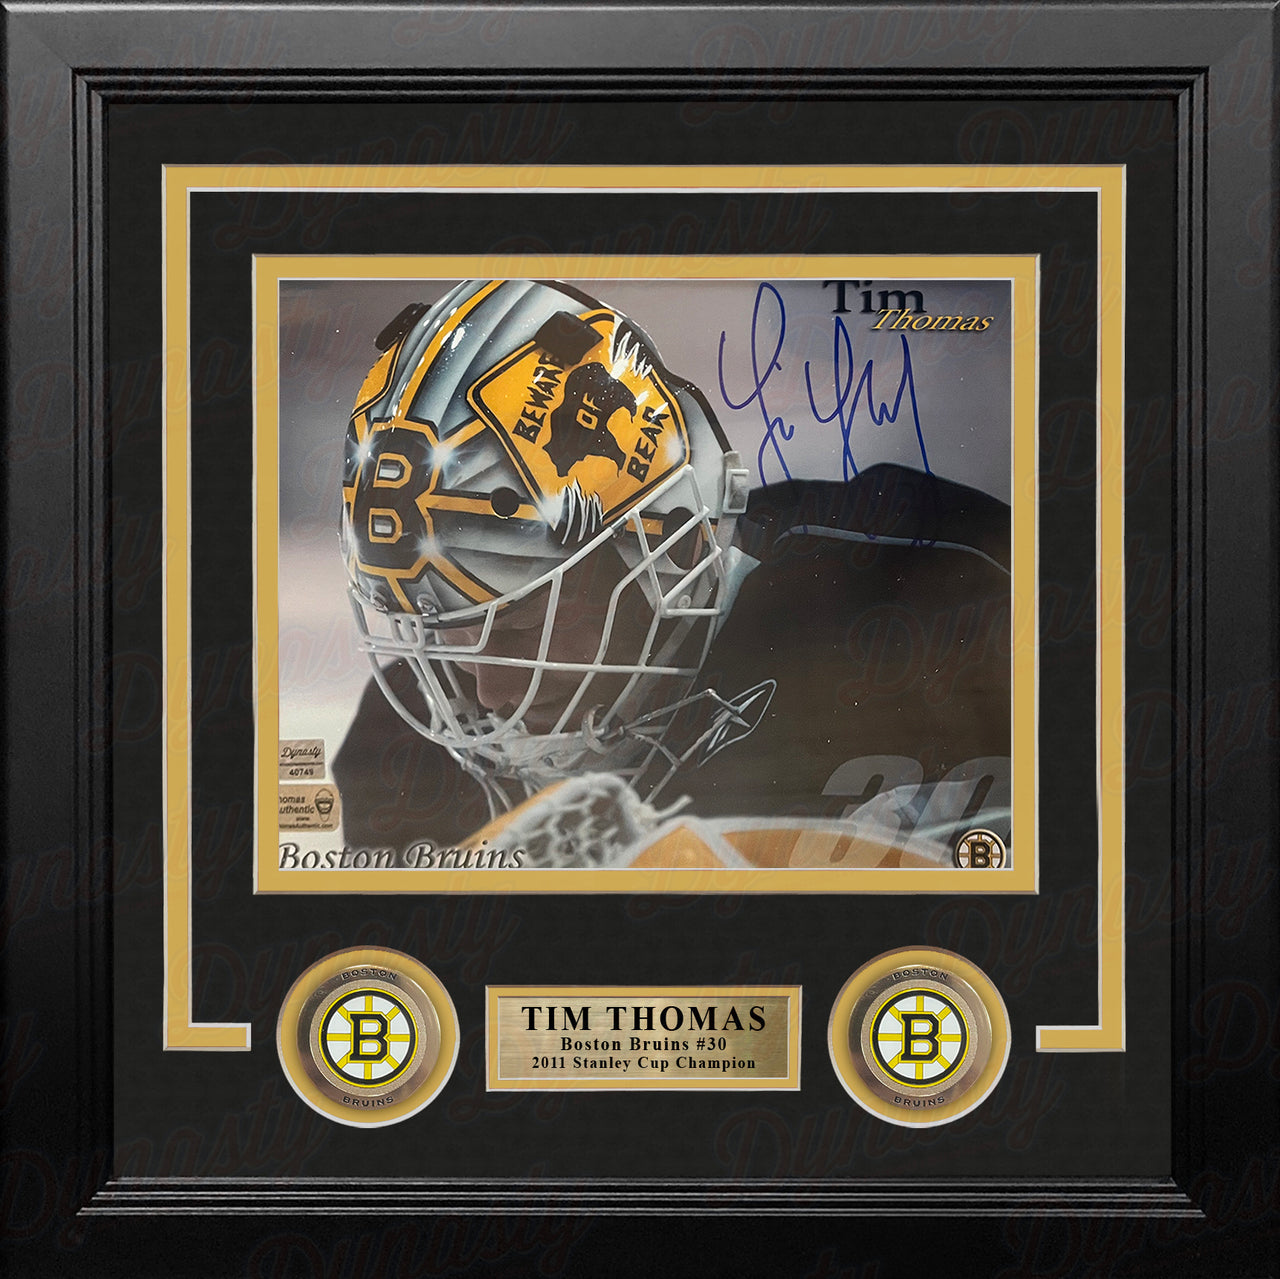 Tim Thomas Head Down Boston Bruins Autographed 8" x 10" Framed Hockey Photo